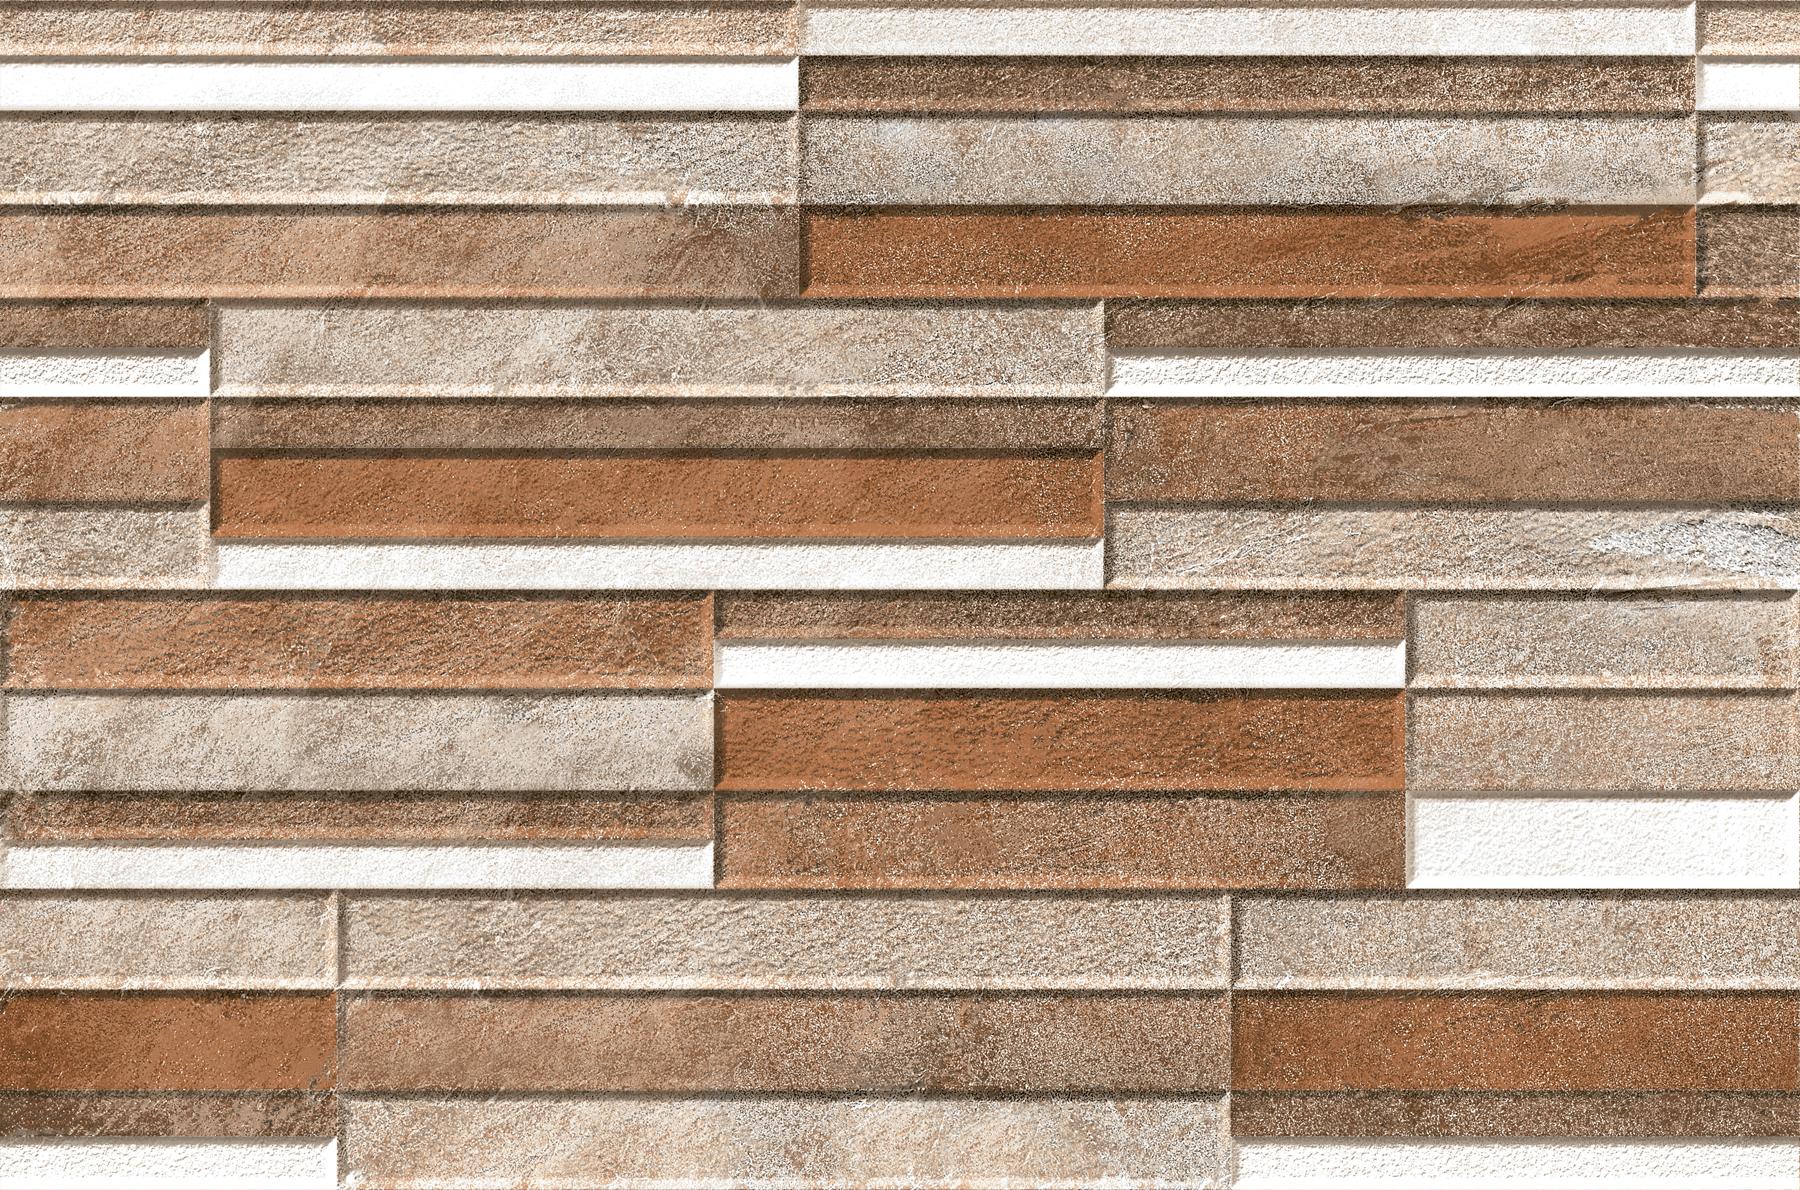 All Tiles for Elevation Tiles, Accent Tiles, Outdoor Tiles, Bar/Restaurant